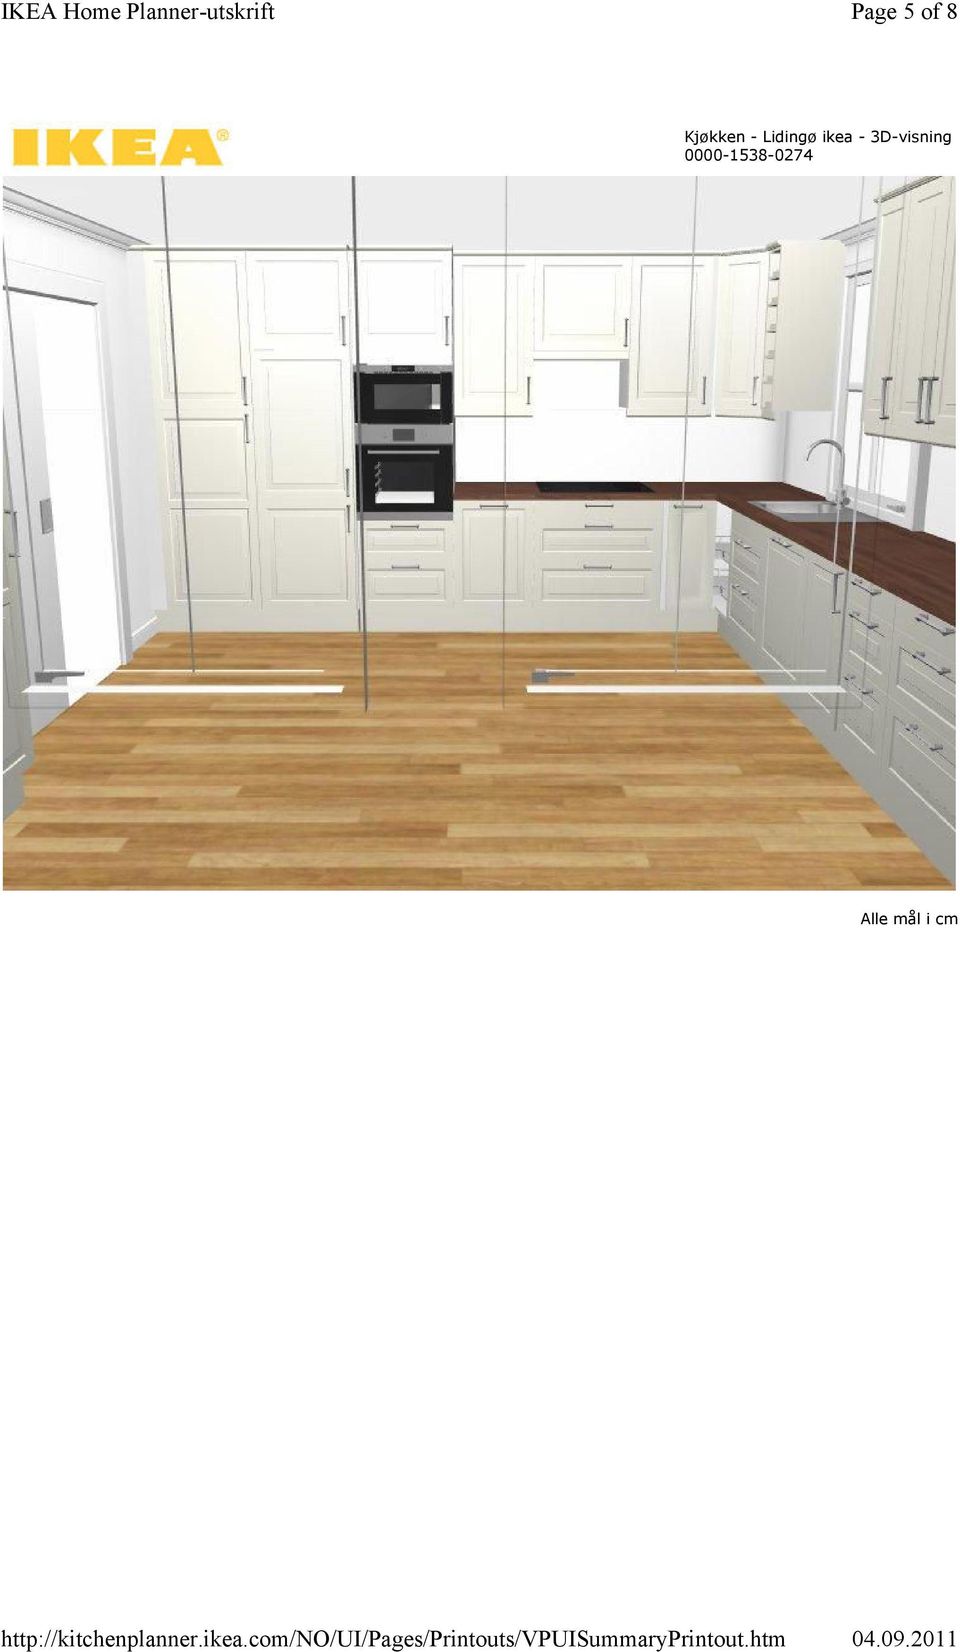 IKEA Home Planner-utskrift - PDF Free Download